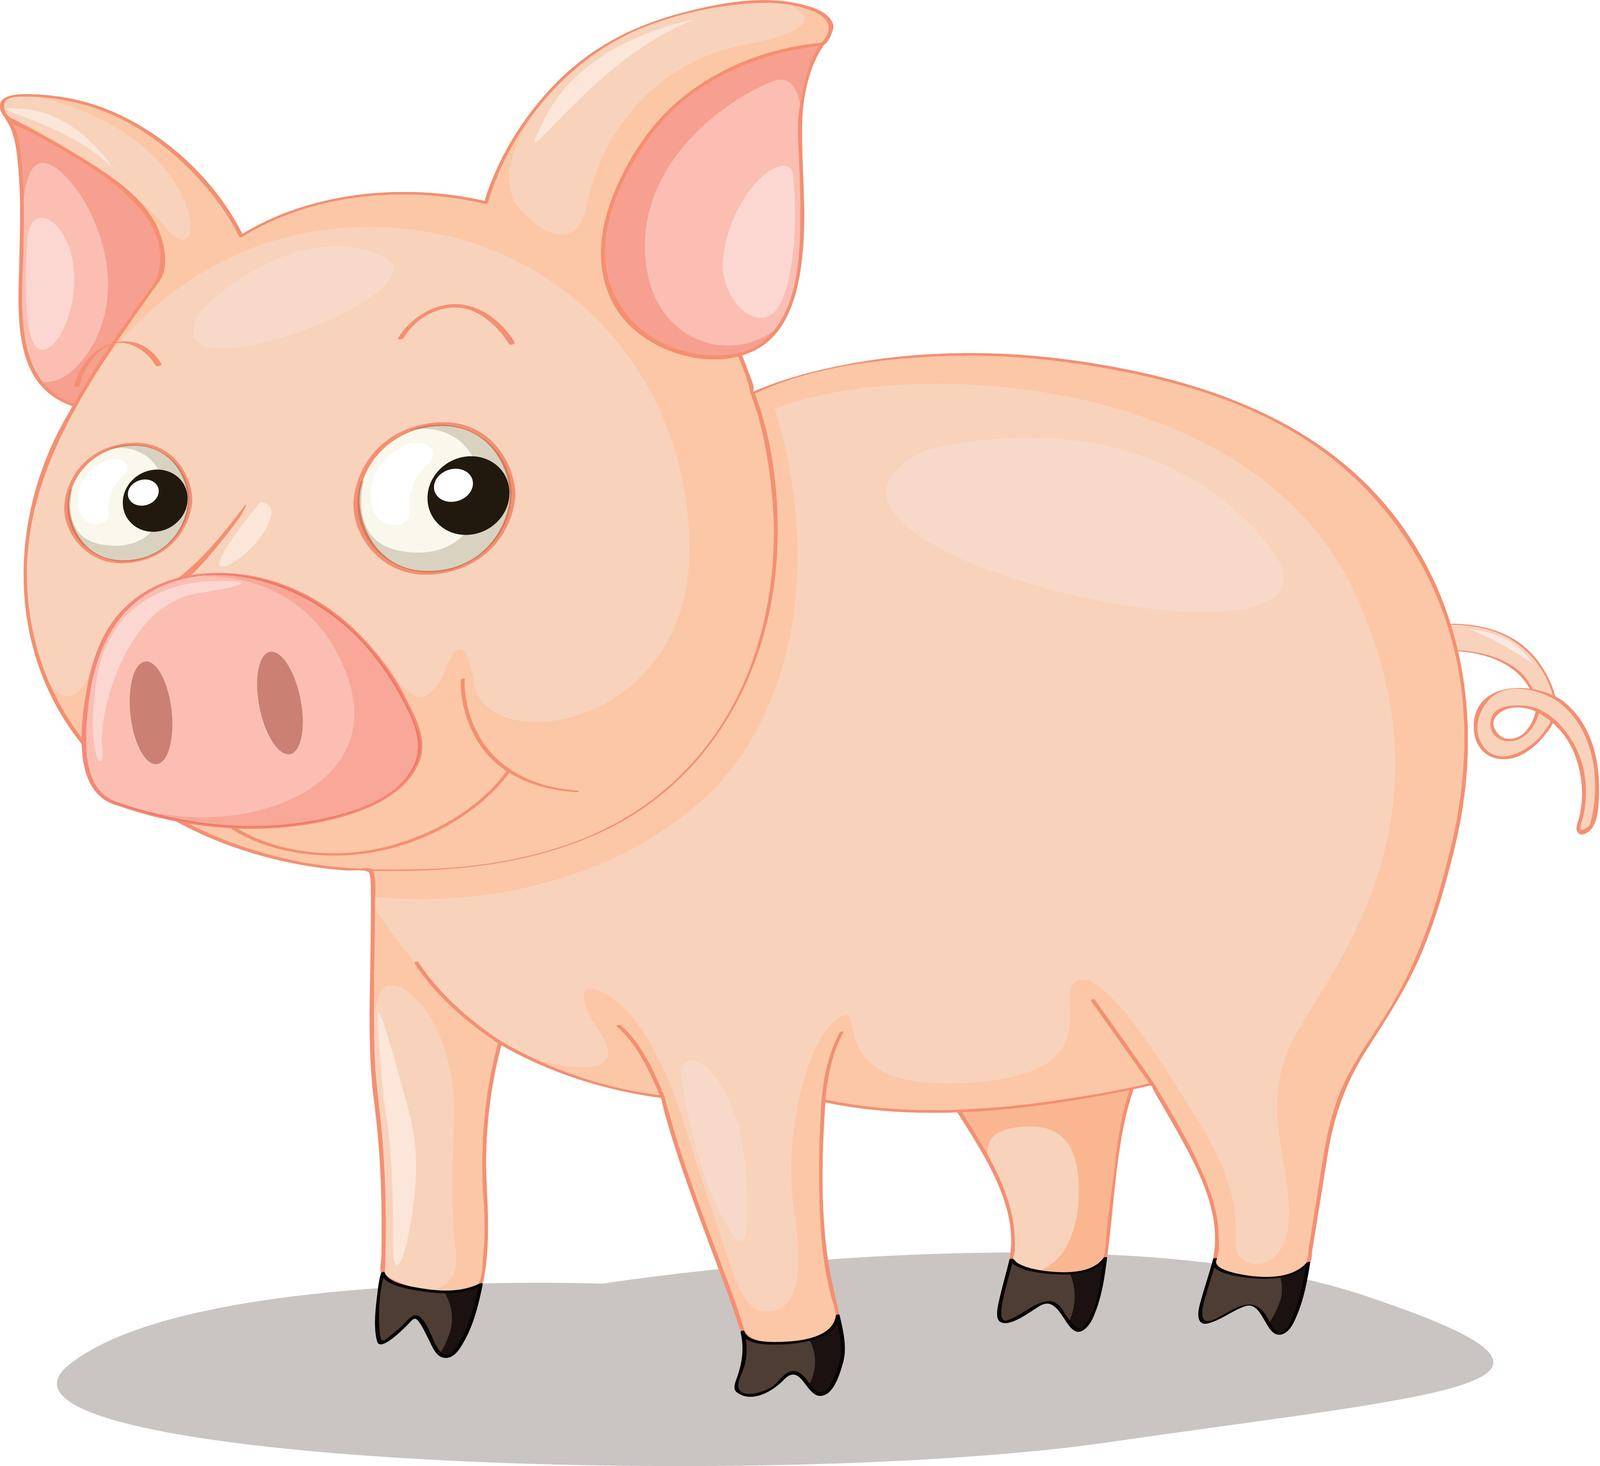 Pig illustration by iimages